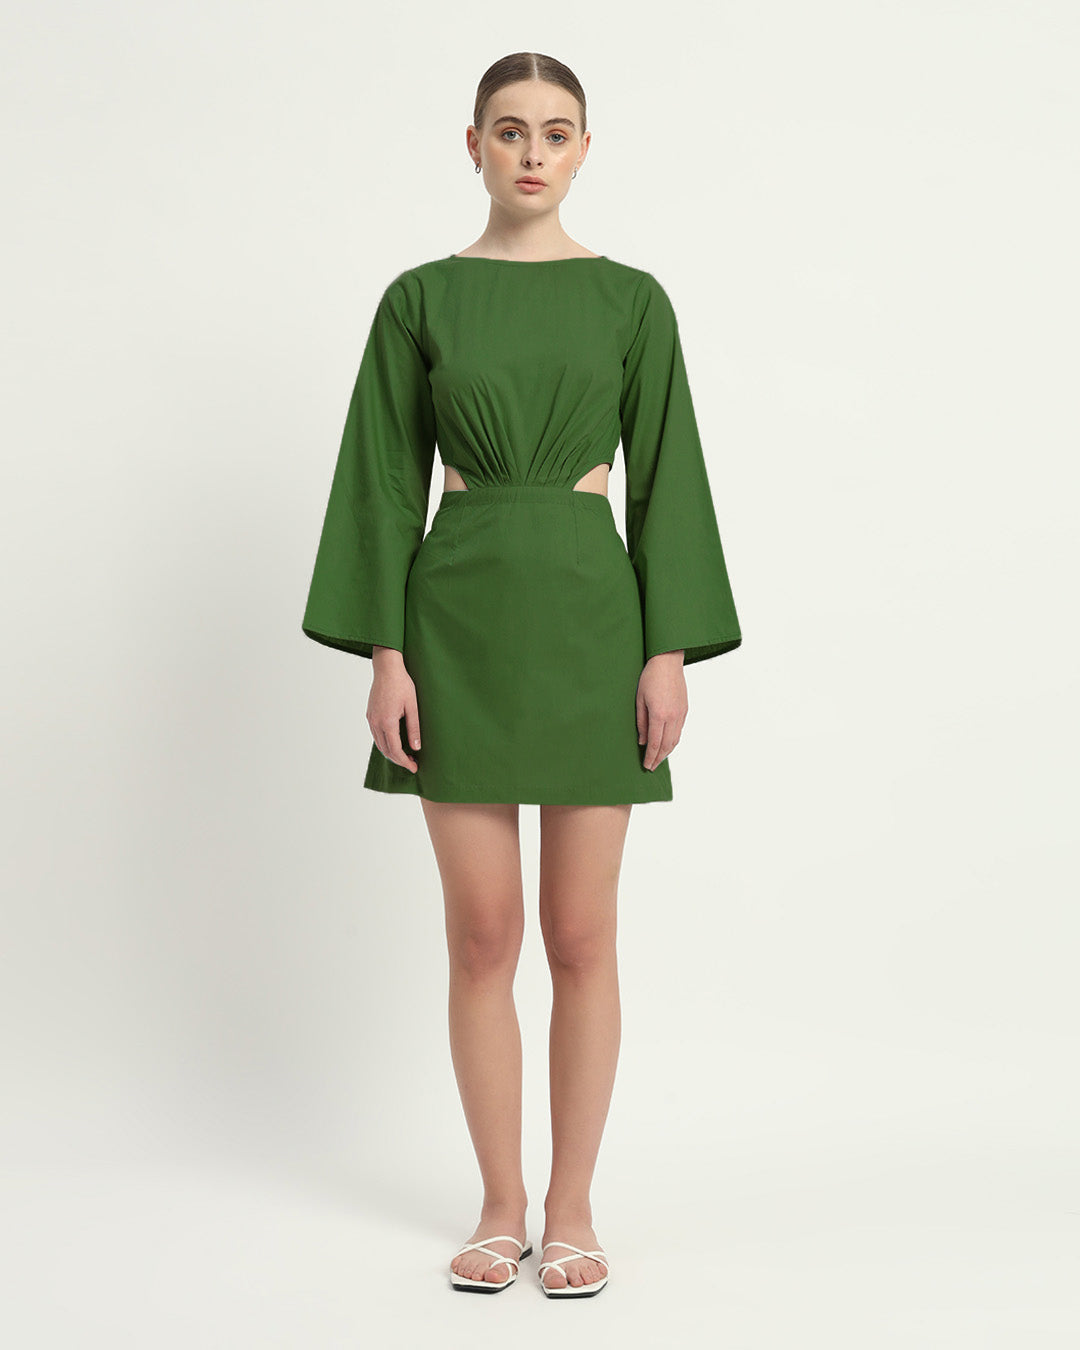 The Emerald Eloy Cotton Dress